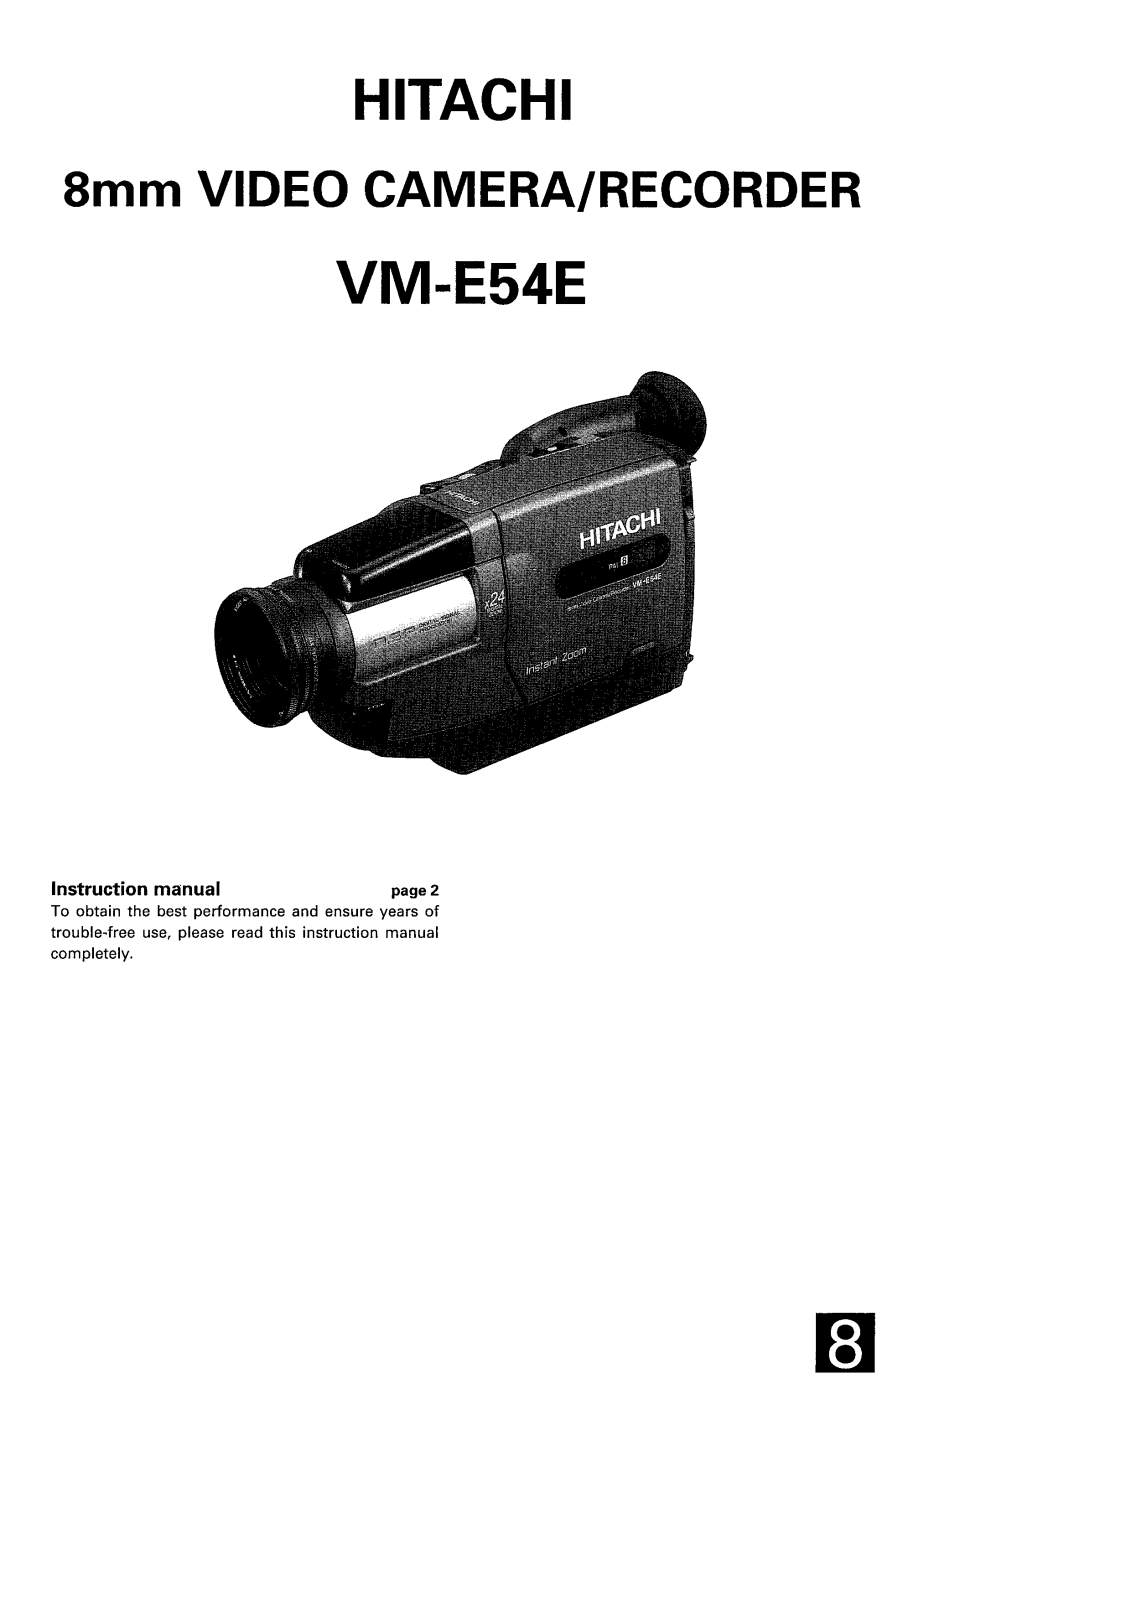 Hitachi VME54E User Manual